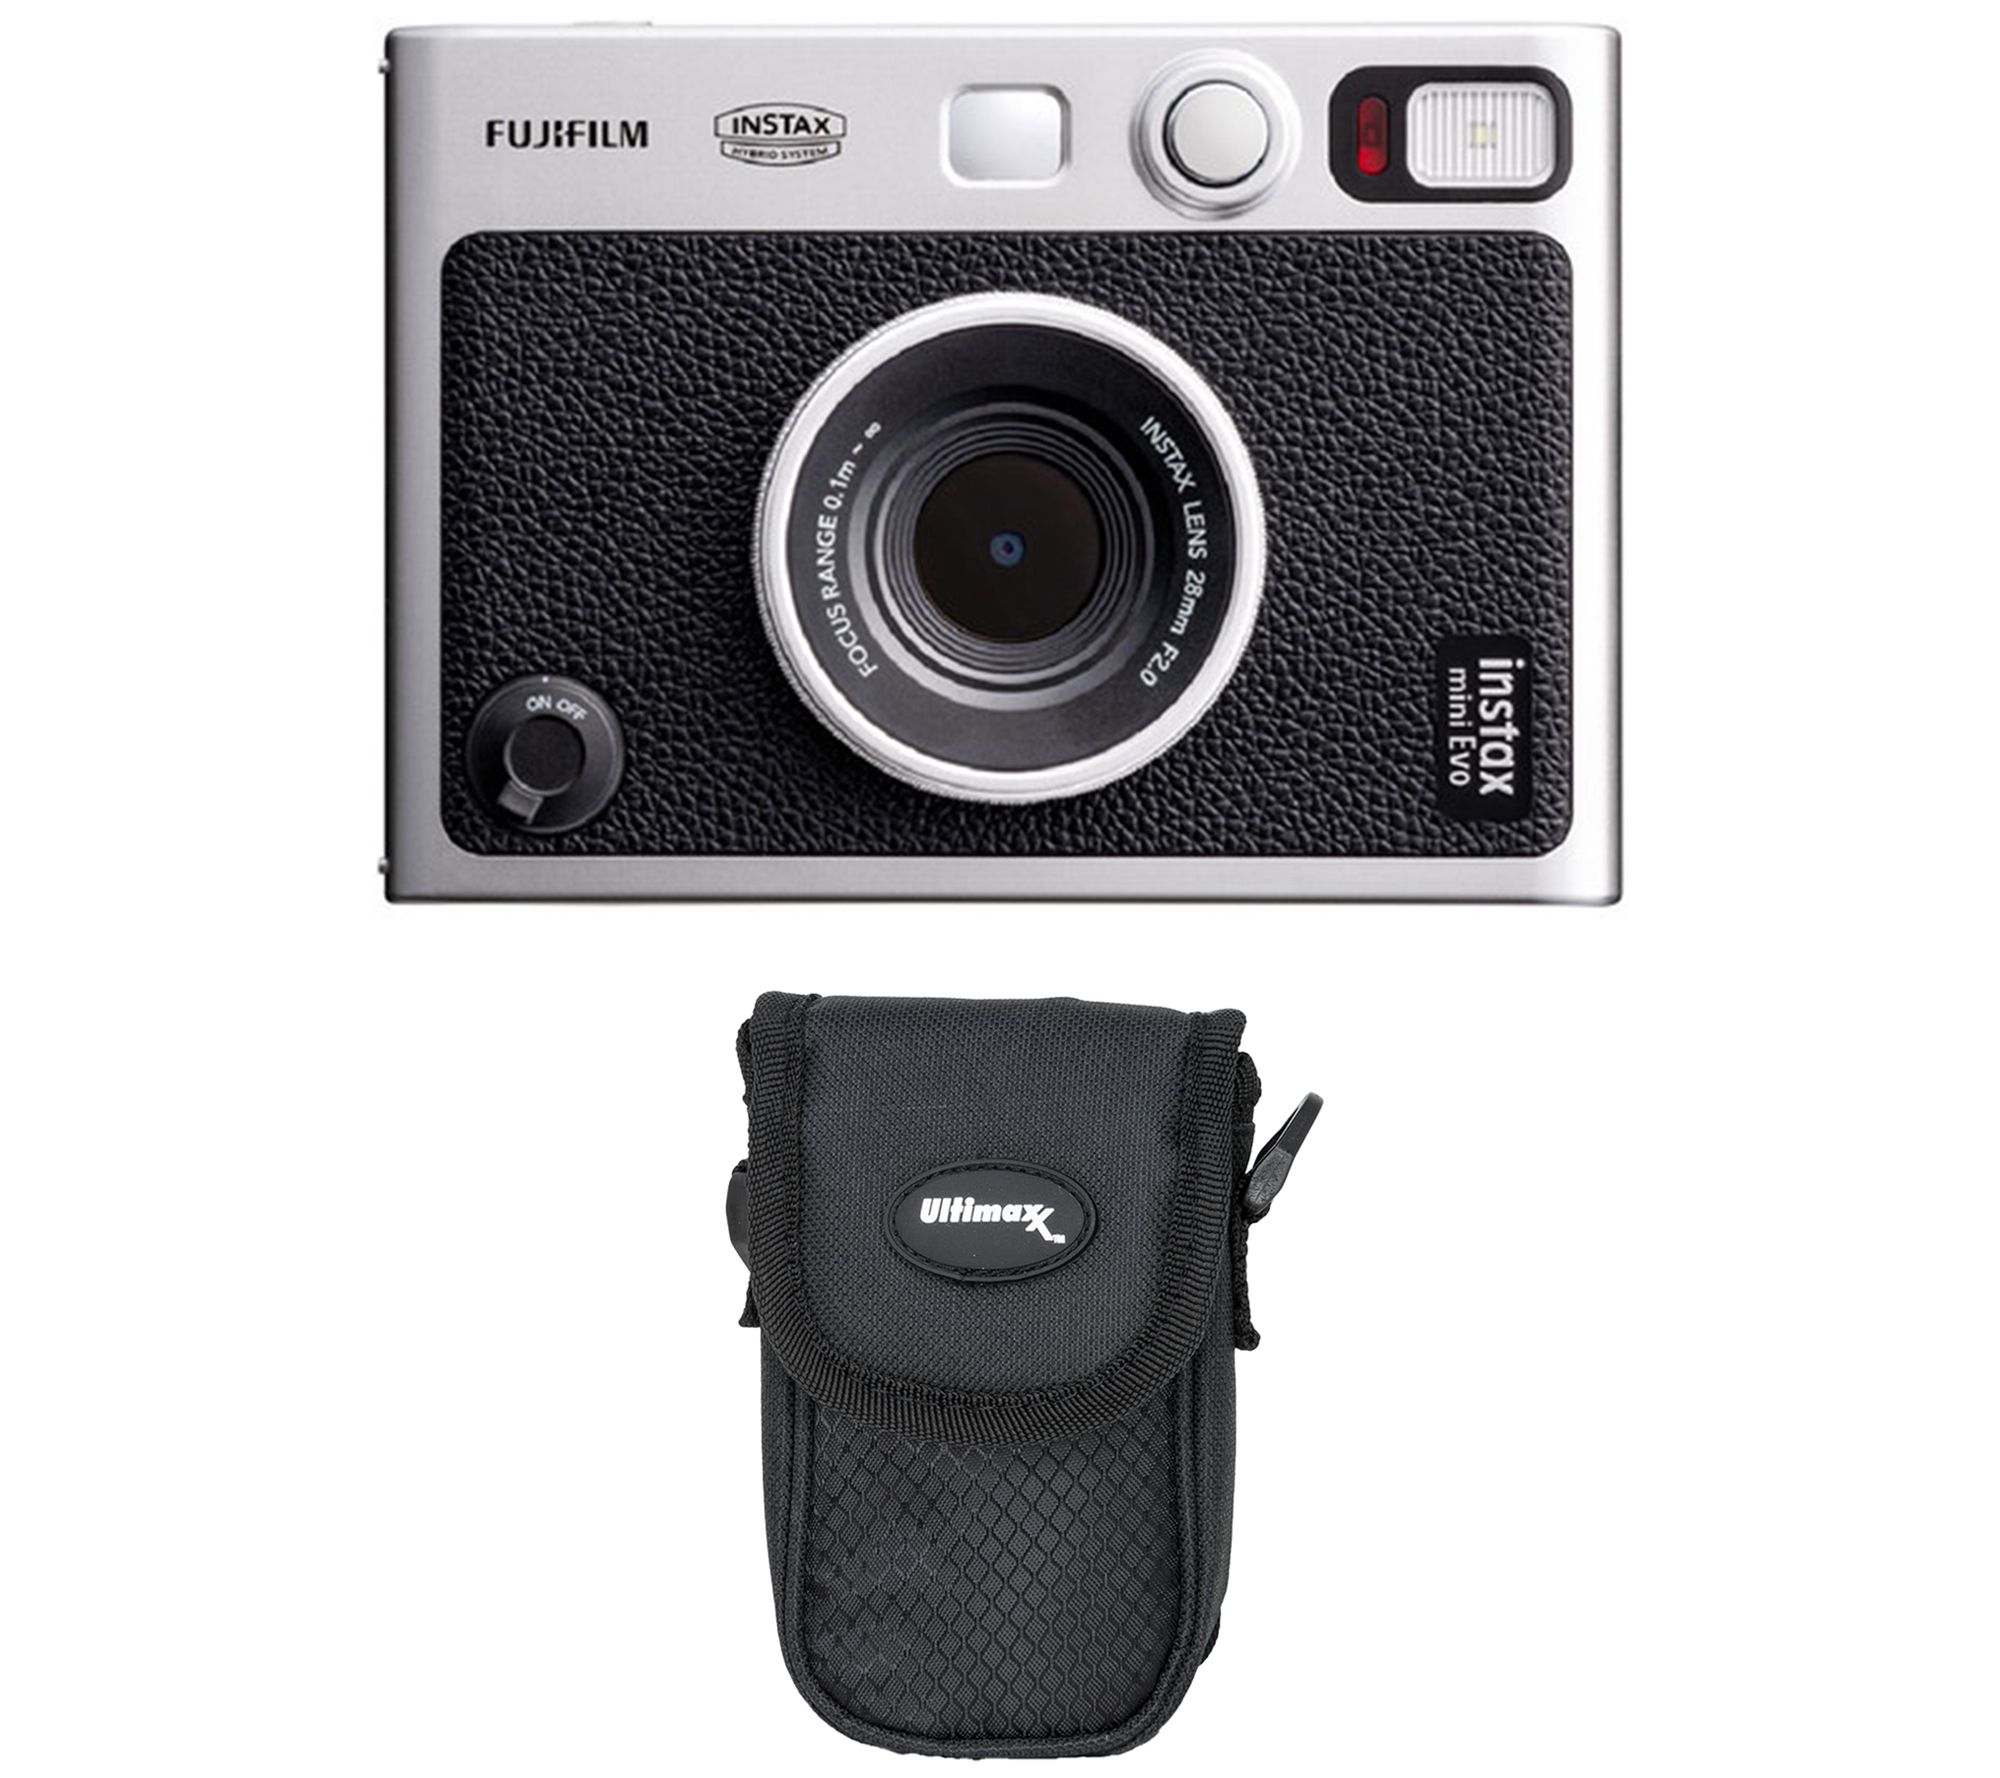 Fujifilm instax mini Evo Hybrid Instant Camera - Black for sale online